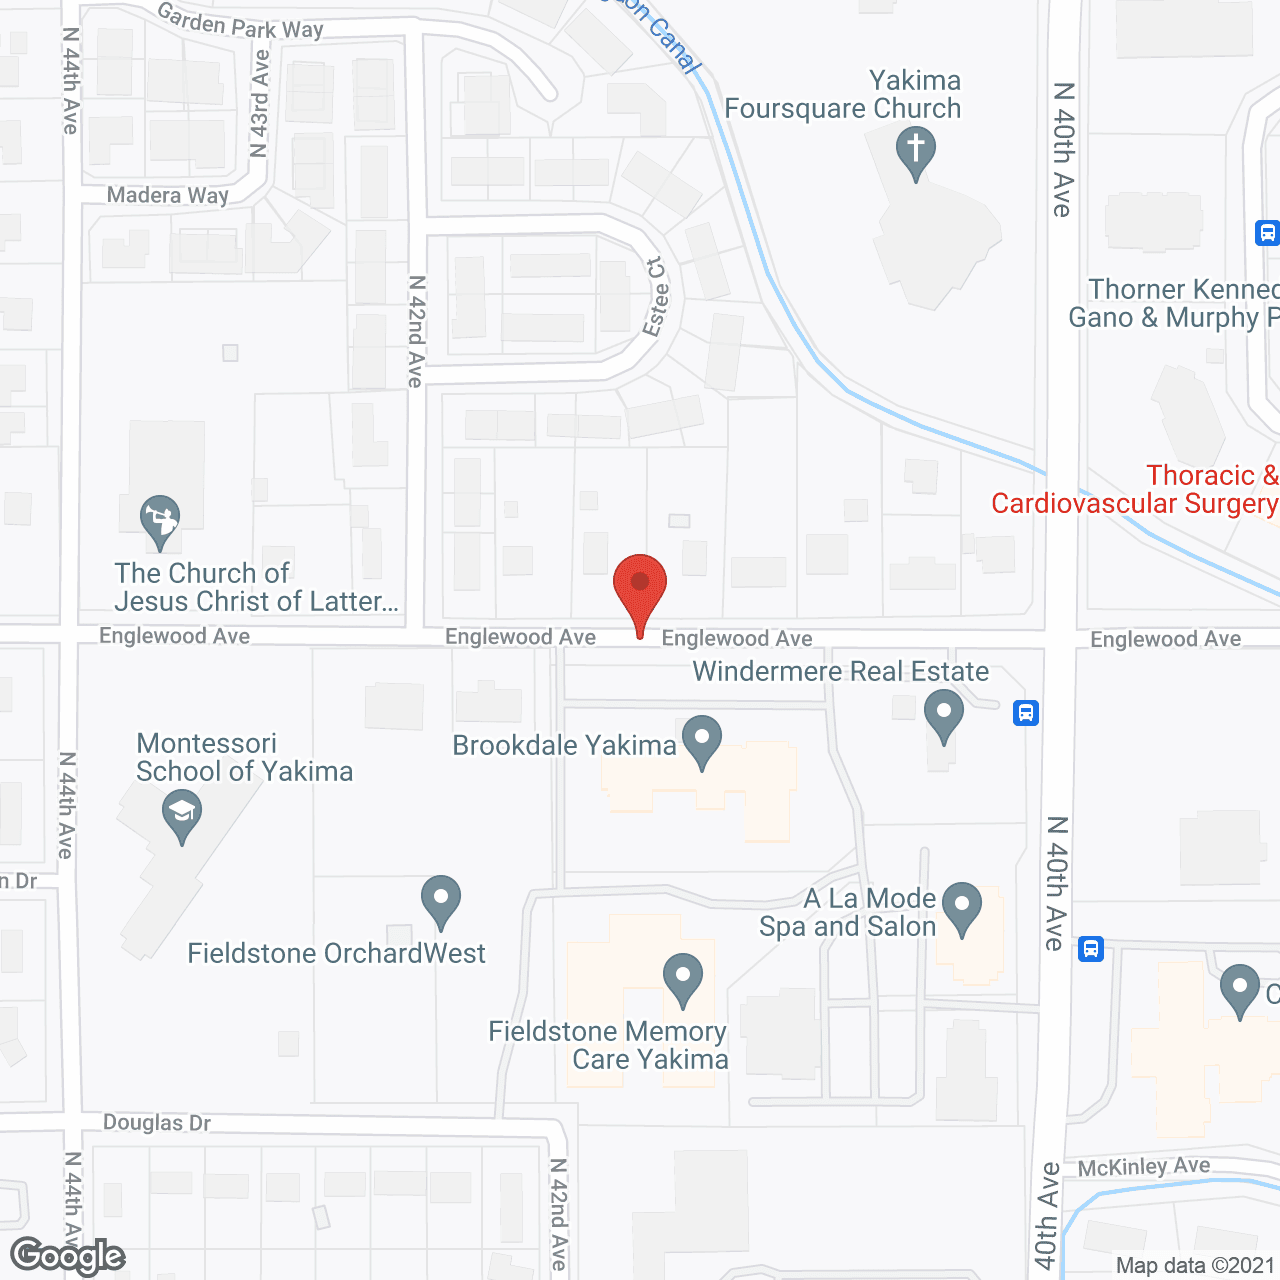 Fieldstone Memory Care Yakima in google map